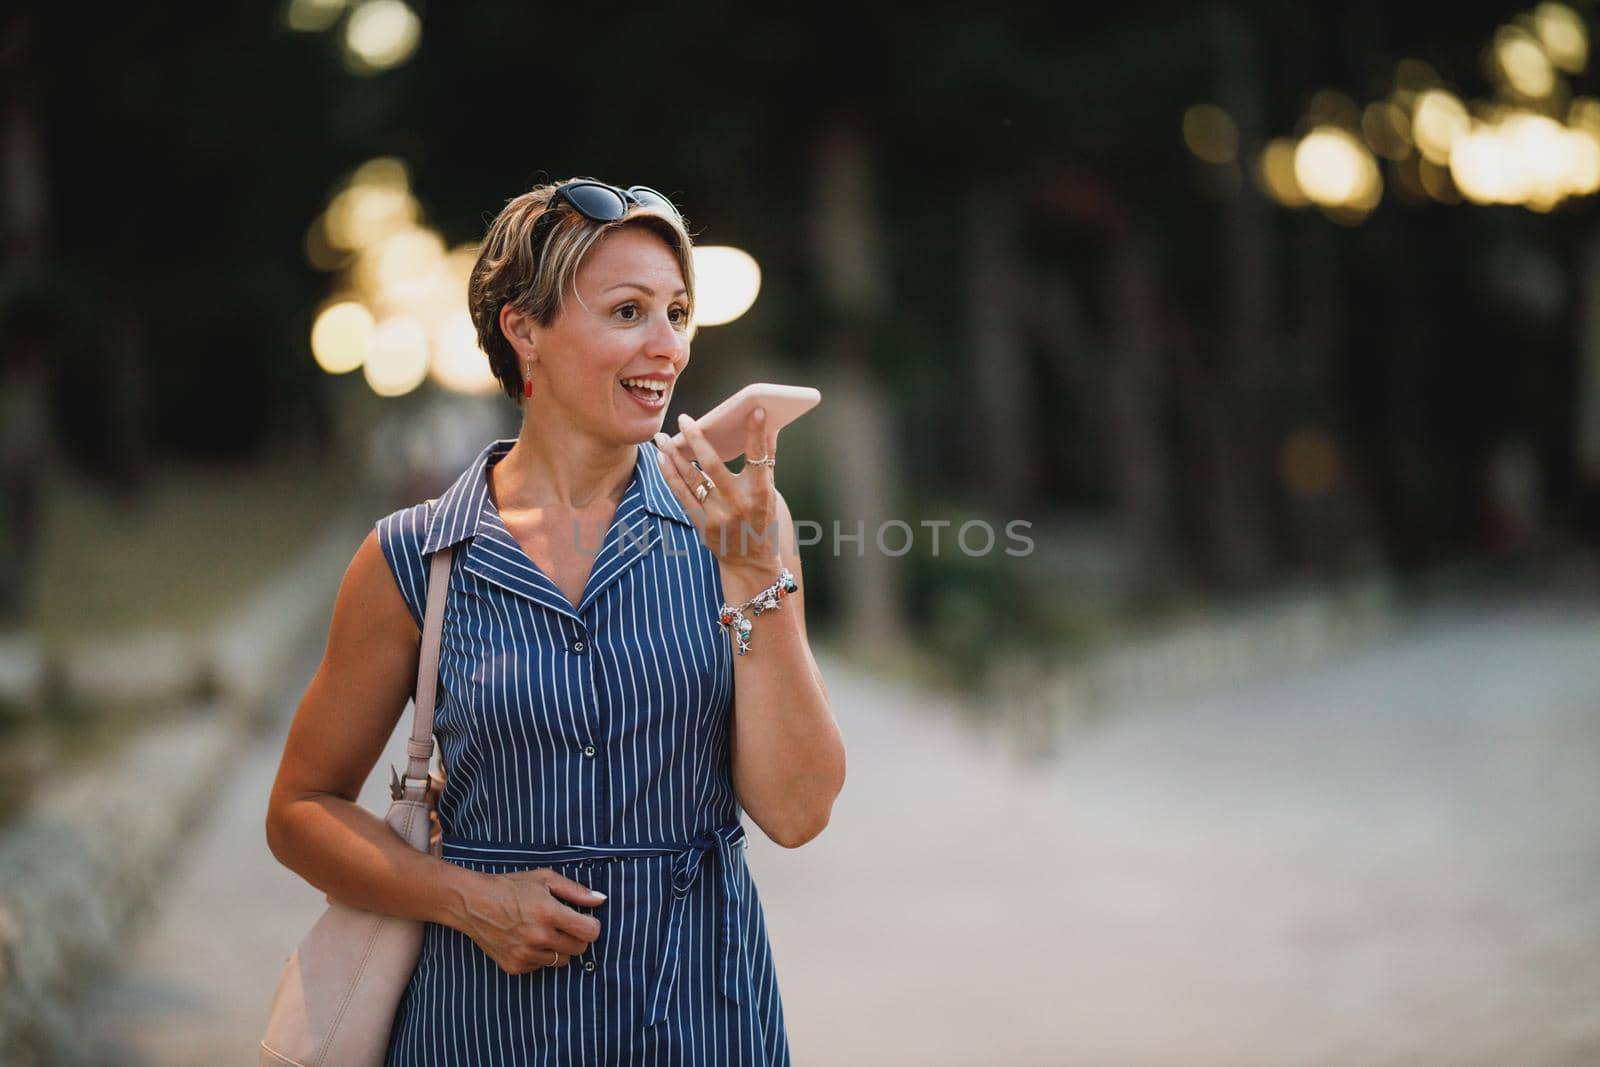 Mature attractive woman using a smartphone and enjoying a summer night walk.